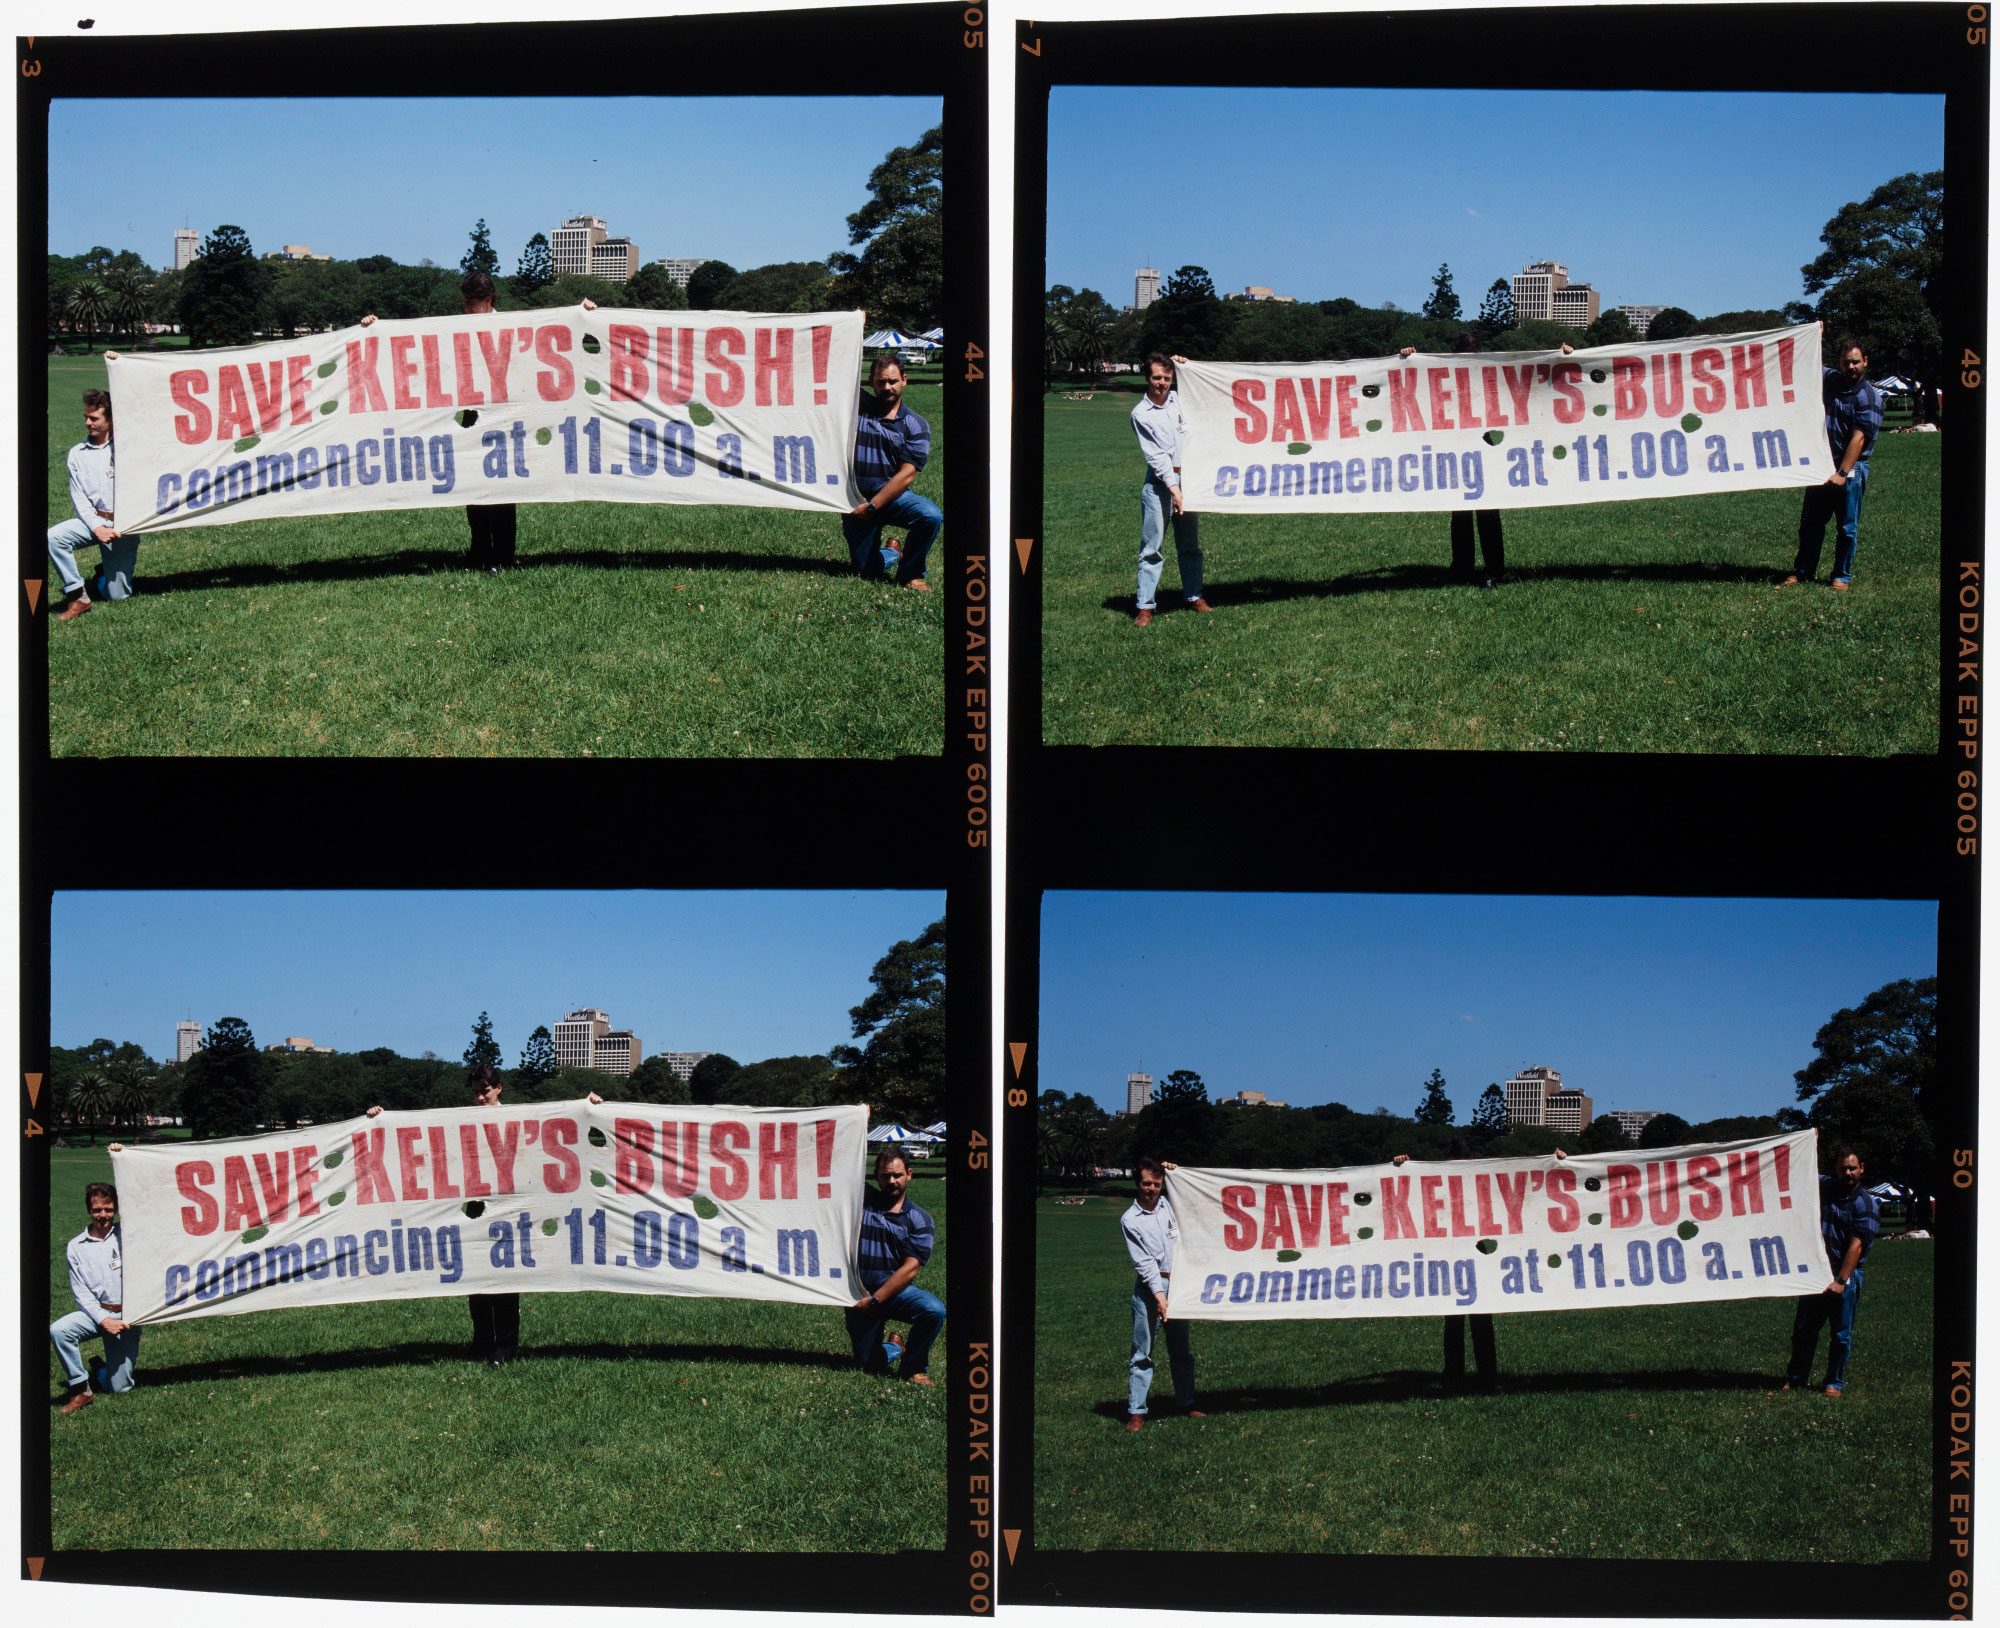 Protestors support saving Kelly’s Bush from development, 1971. Battlers for Kellys Bush.